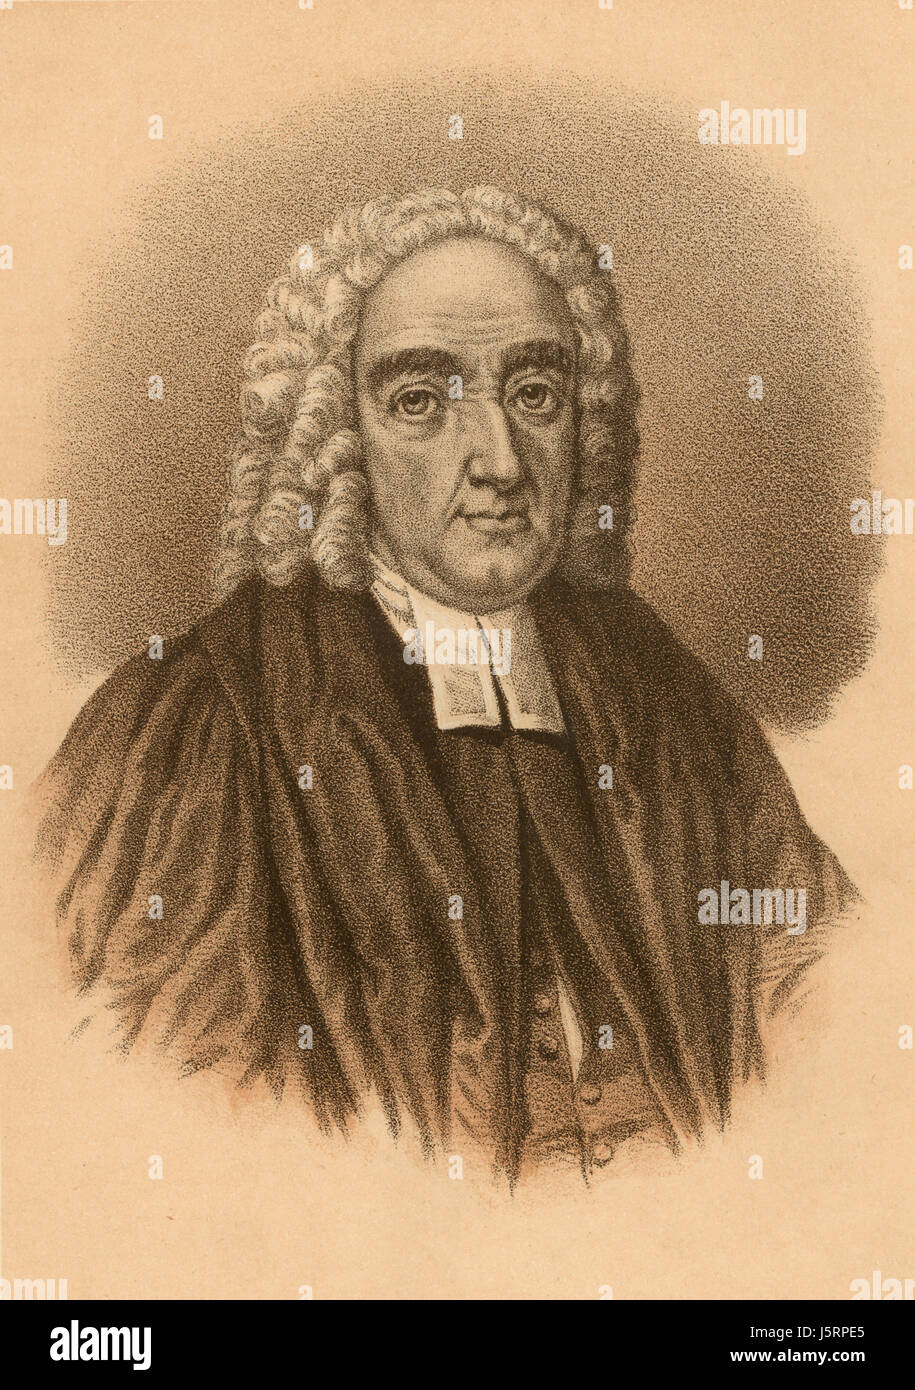 Jonathan Swift (1667-1745), Irish Satirist, Essayist and Political Writer, Portrait Stock Photo